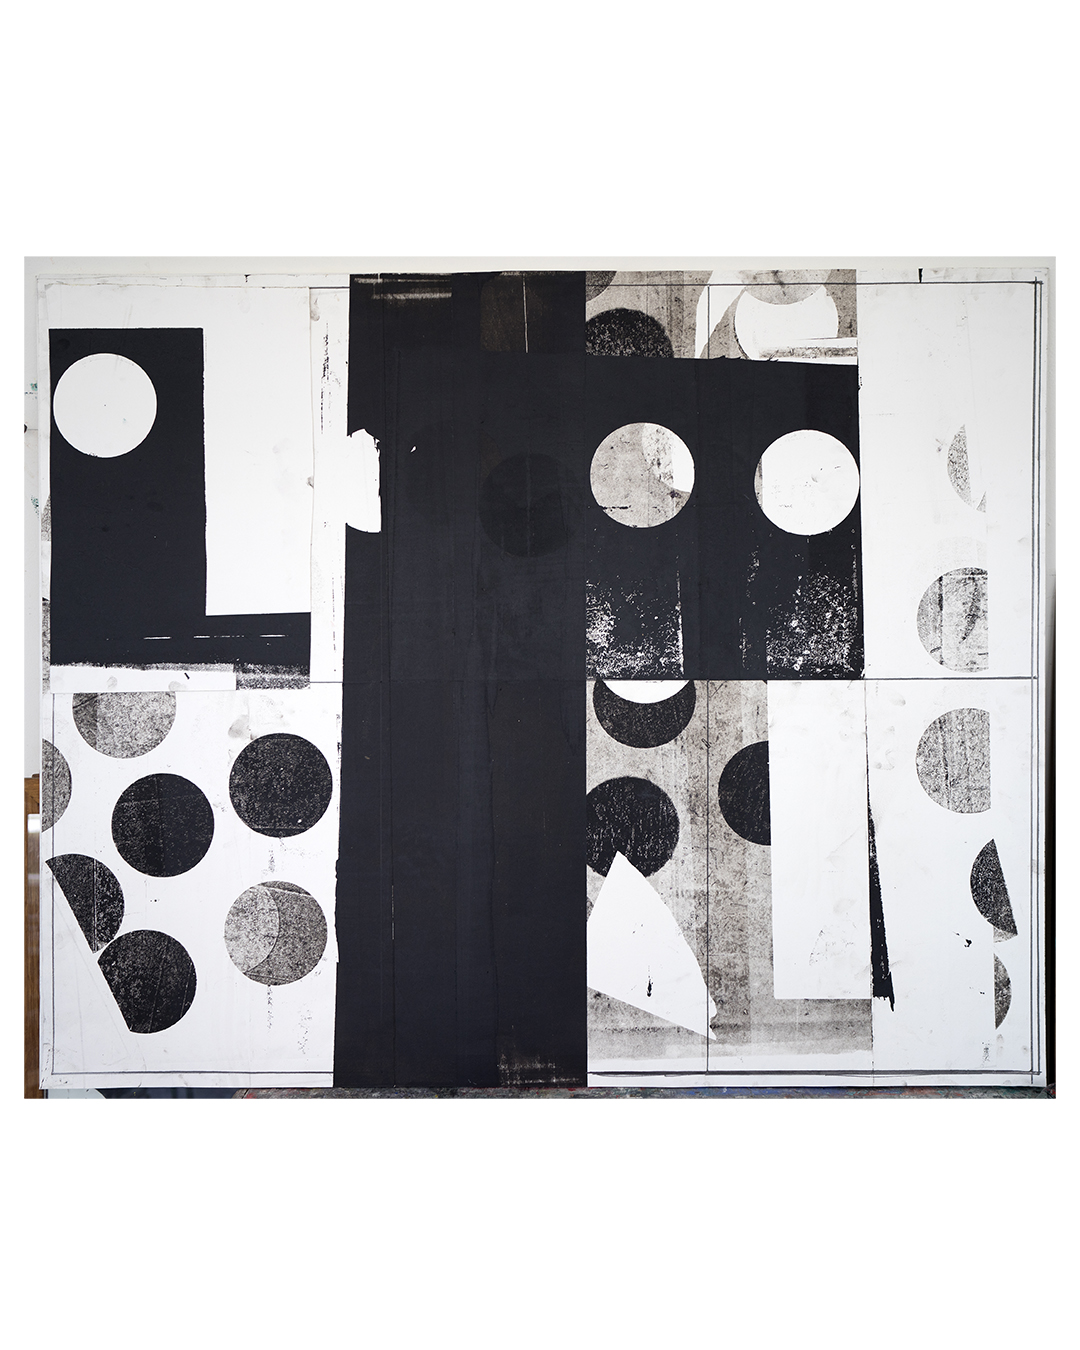 Piet Dieleman, zonder titel, 2020, collage, monotype inkt op oliebasis, potlood, acrylbindmiddel op papier, 1290 x 1590 mm, €3270